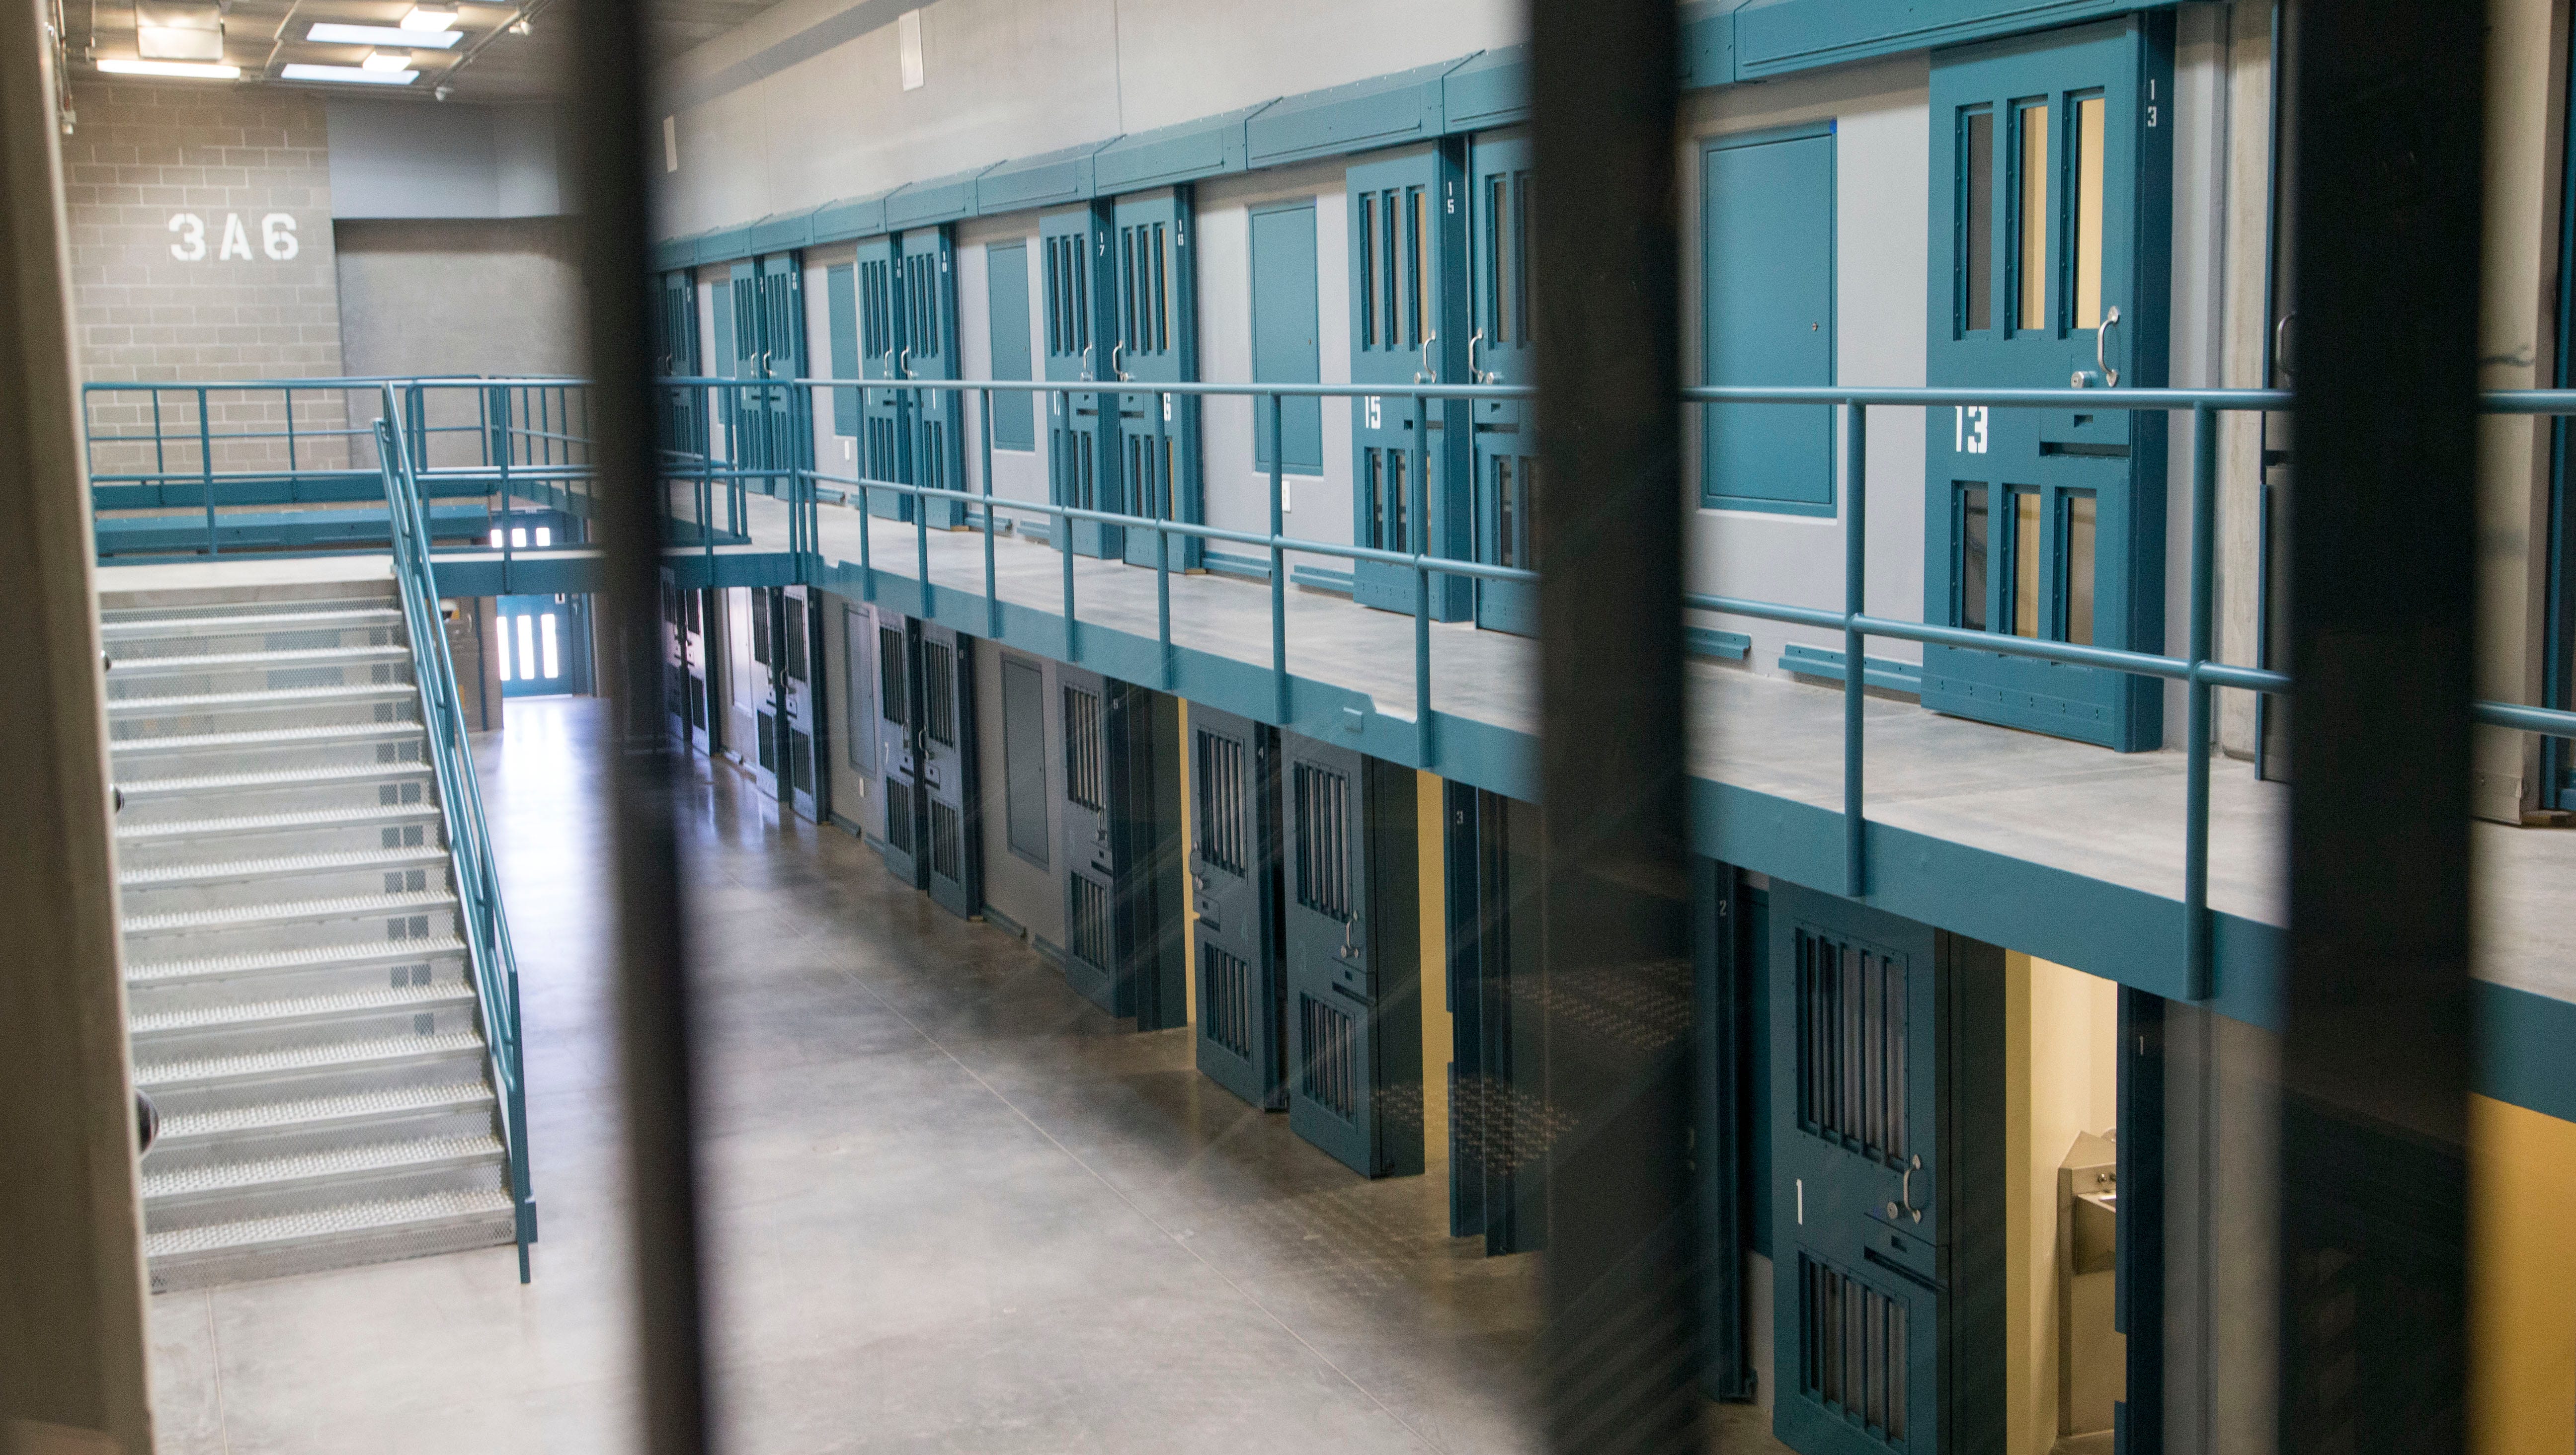 Critics Question Need For New Maximum Security Prison Near Buckeye